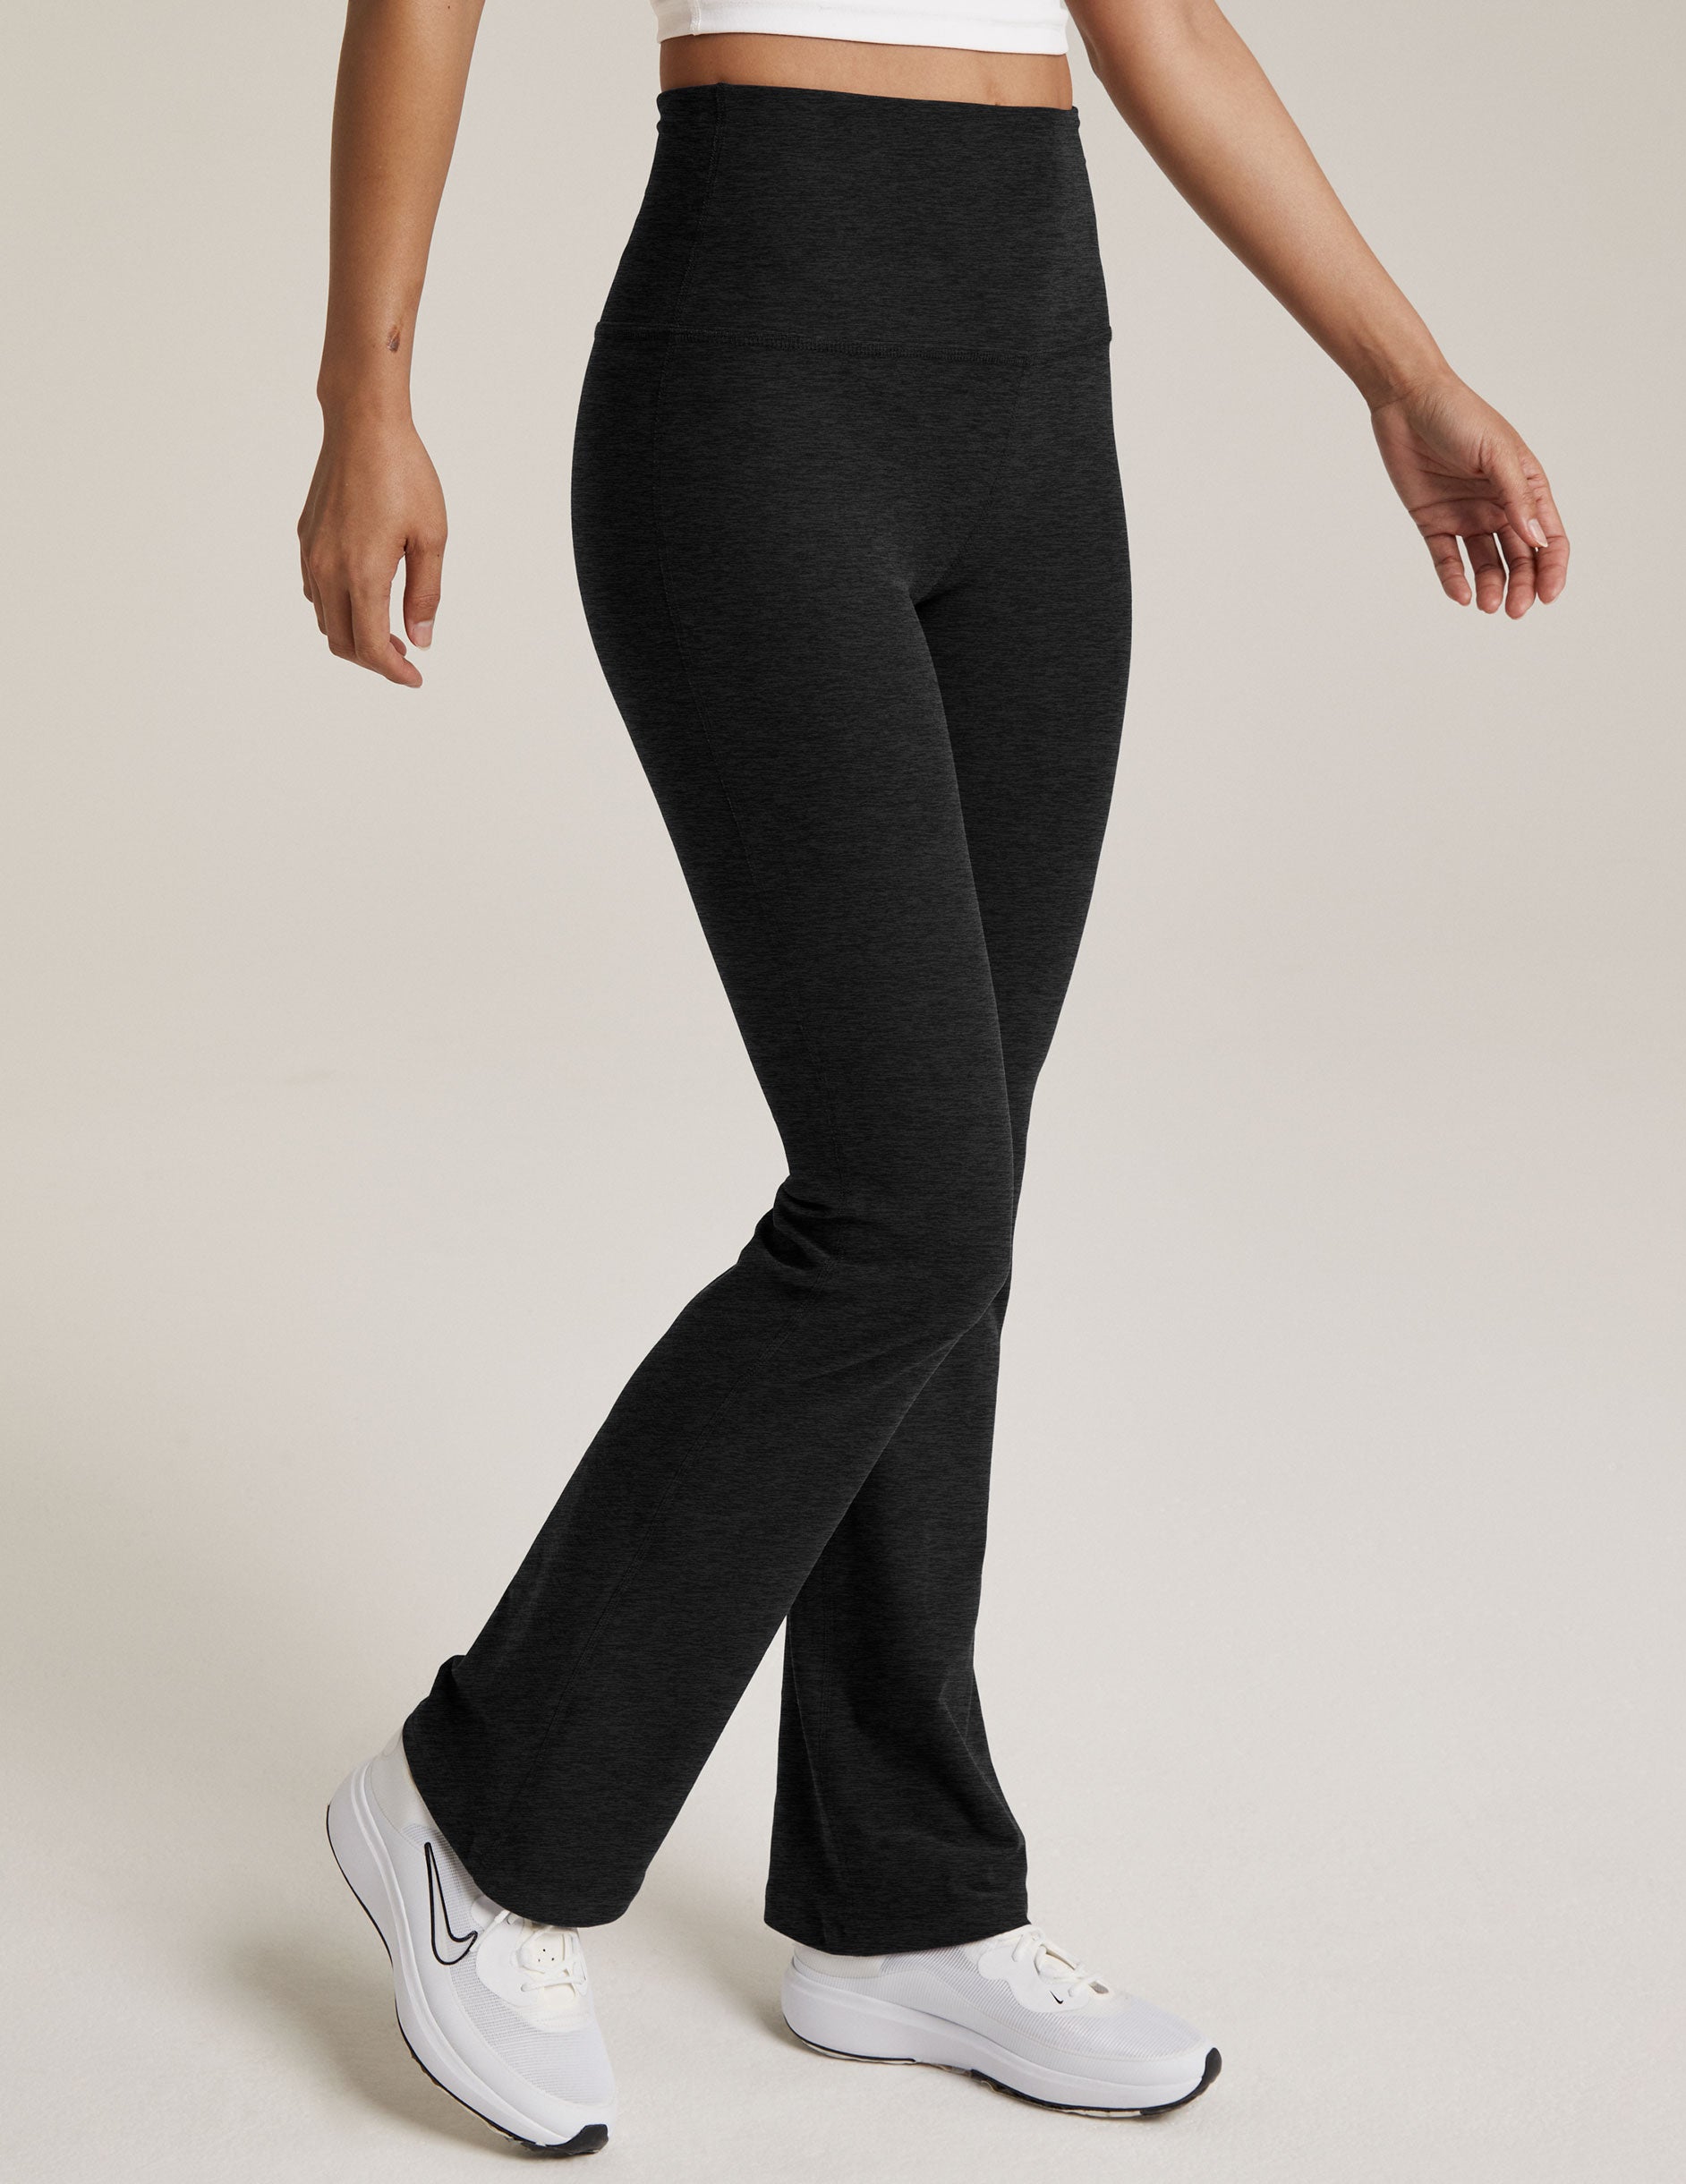  Side Pockets,Petite Womens Straight Leg Yoga Pants Slim Fit Workout  Pants,27,Black,M